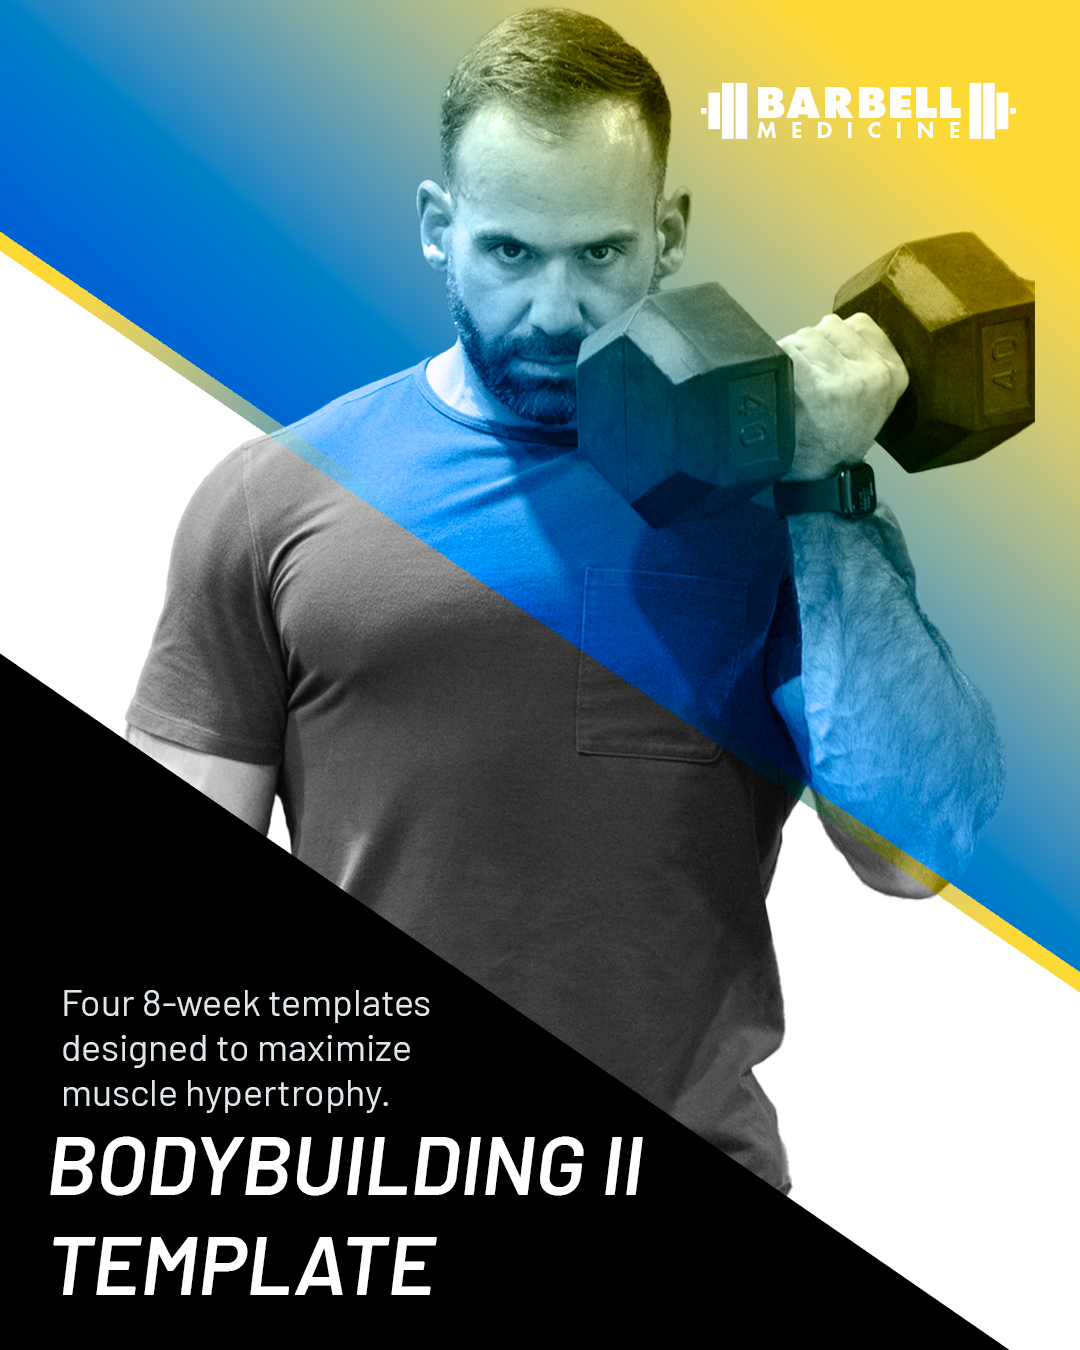 bodybuilding-ii-template-new-barbell-medicine